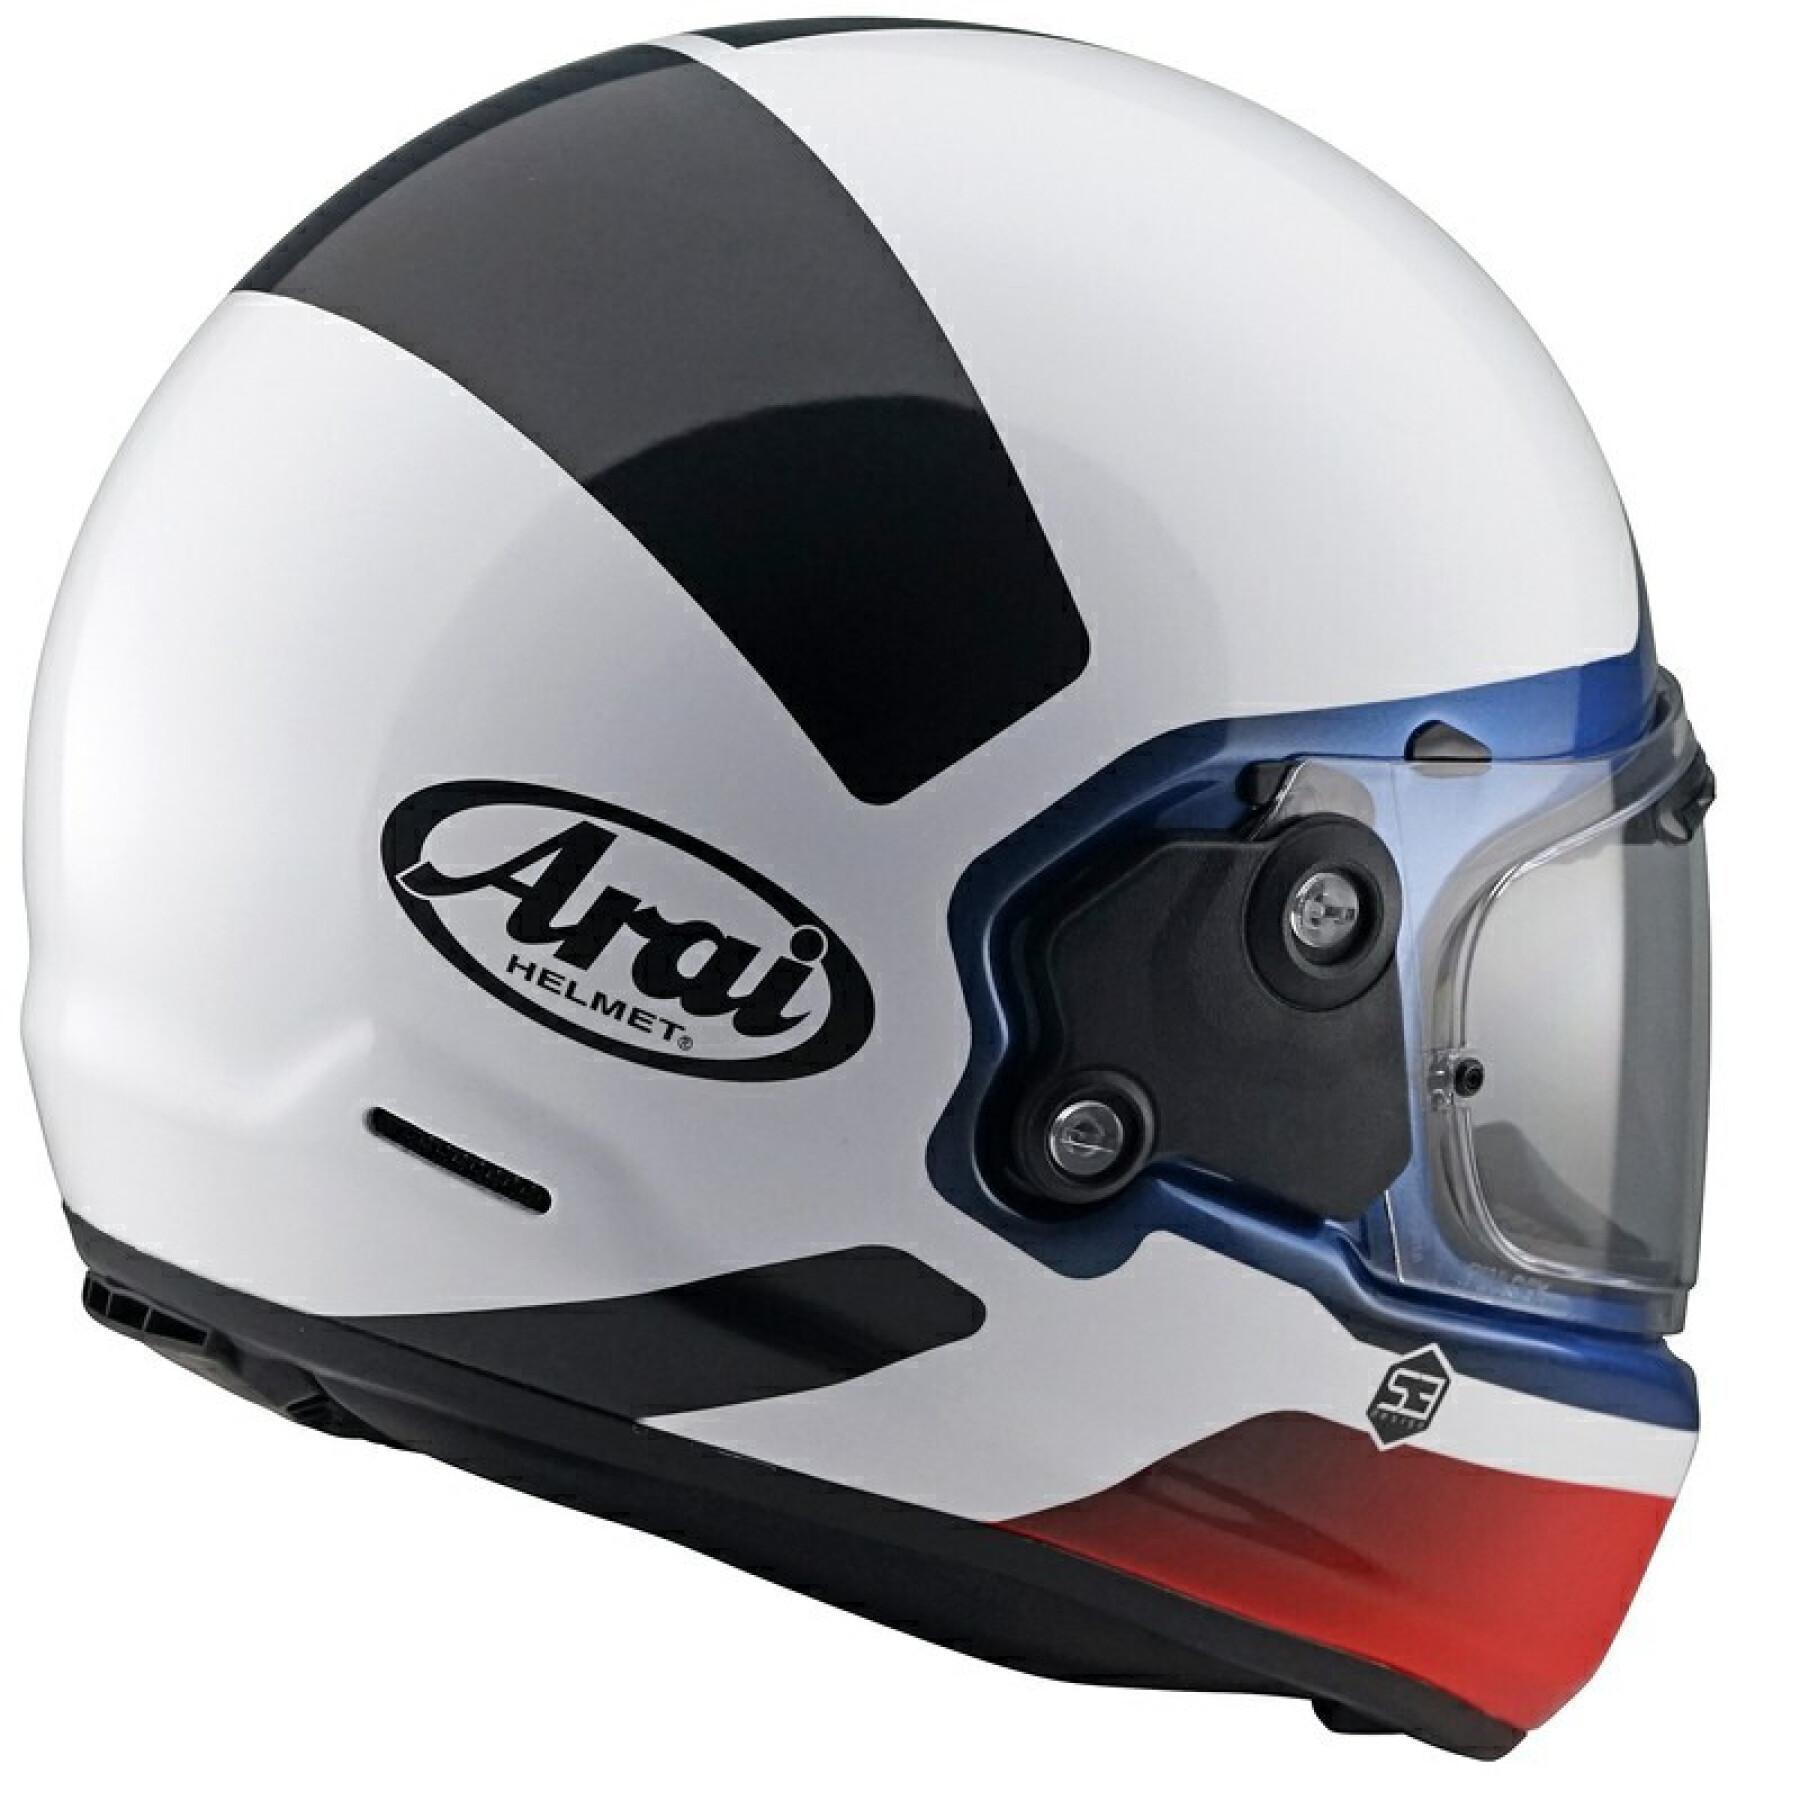 Full face motorcycle helmet Arai Concept-X Backer